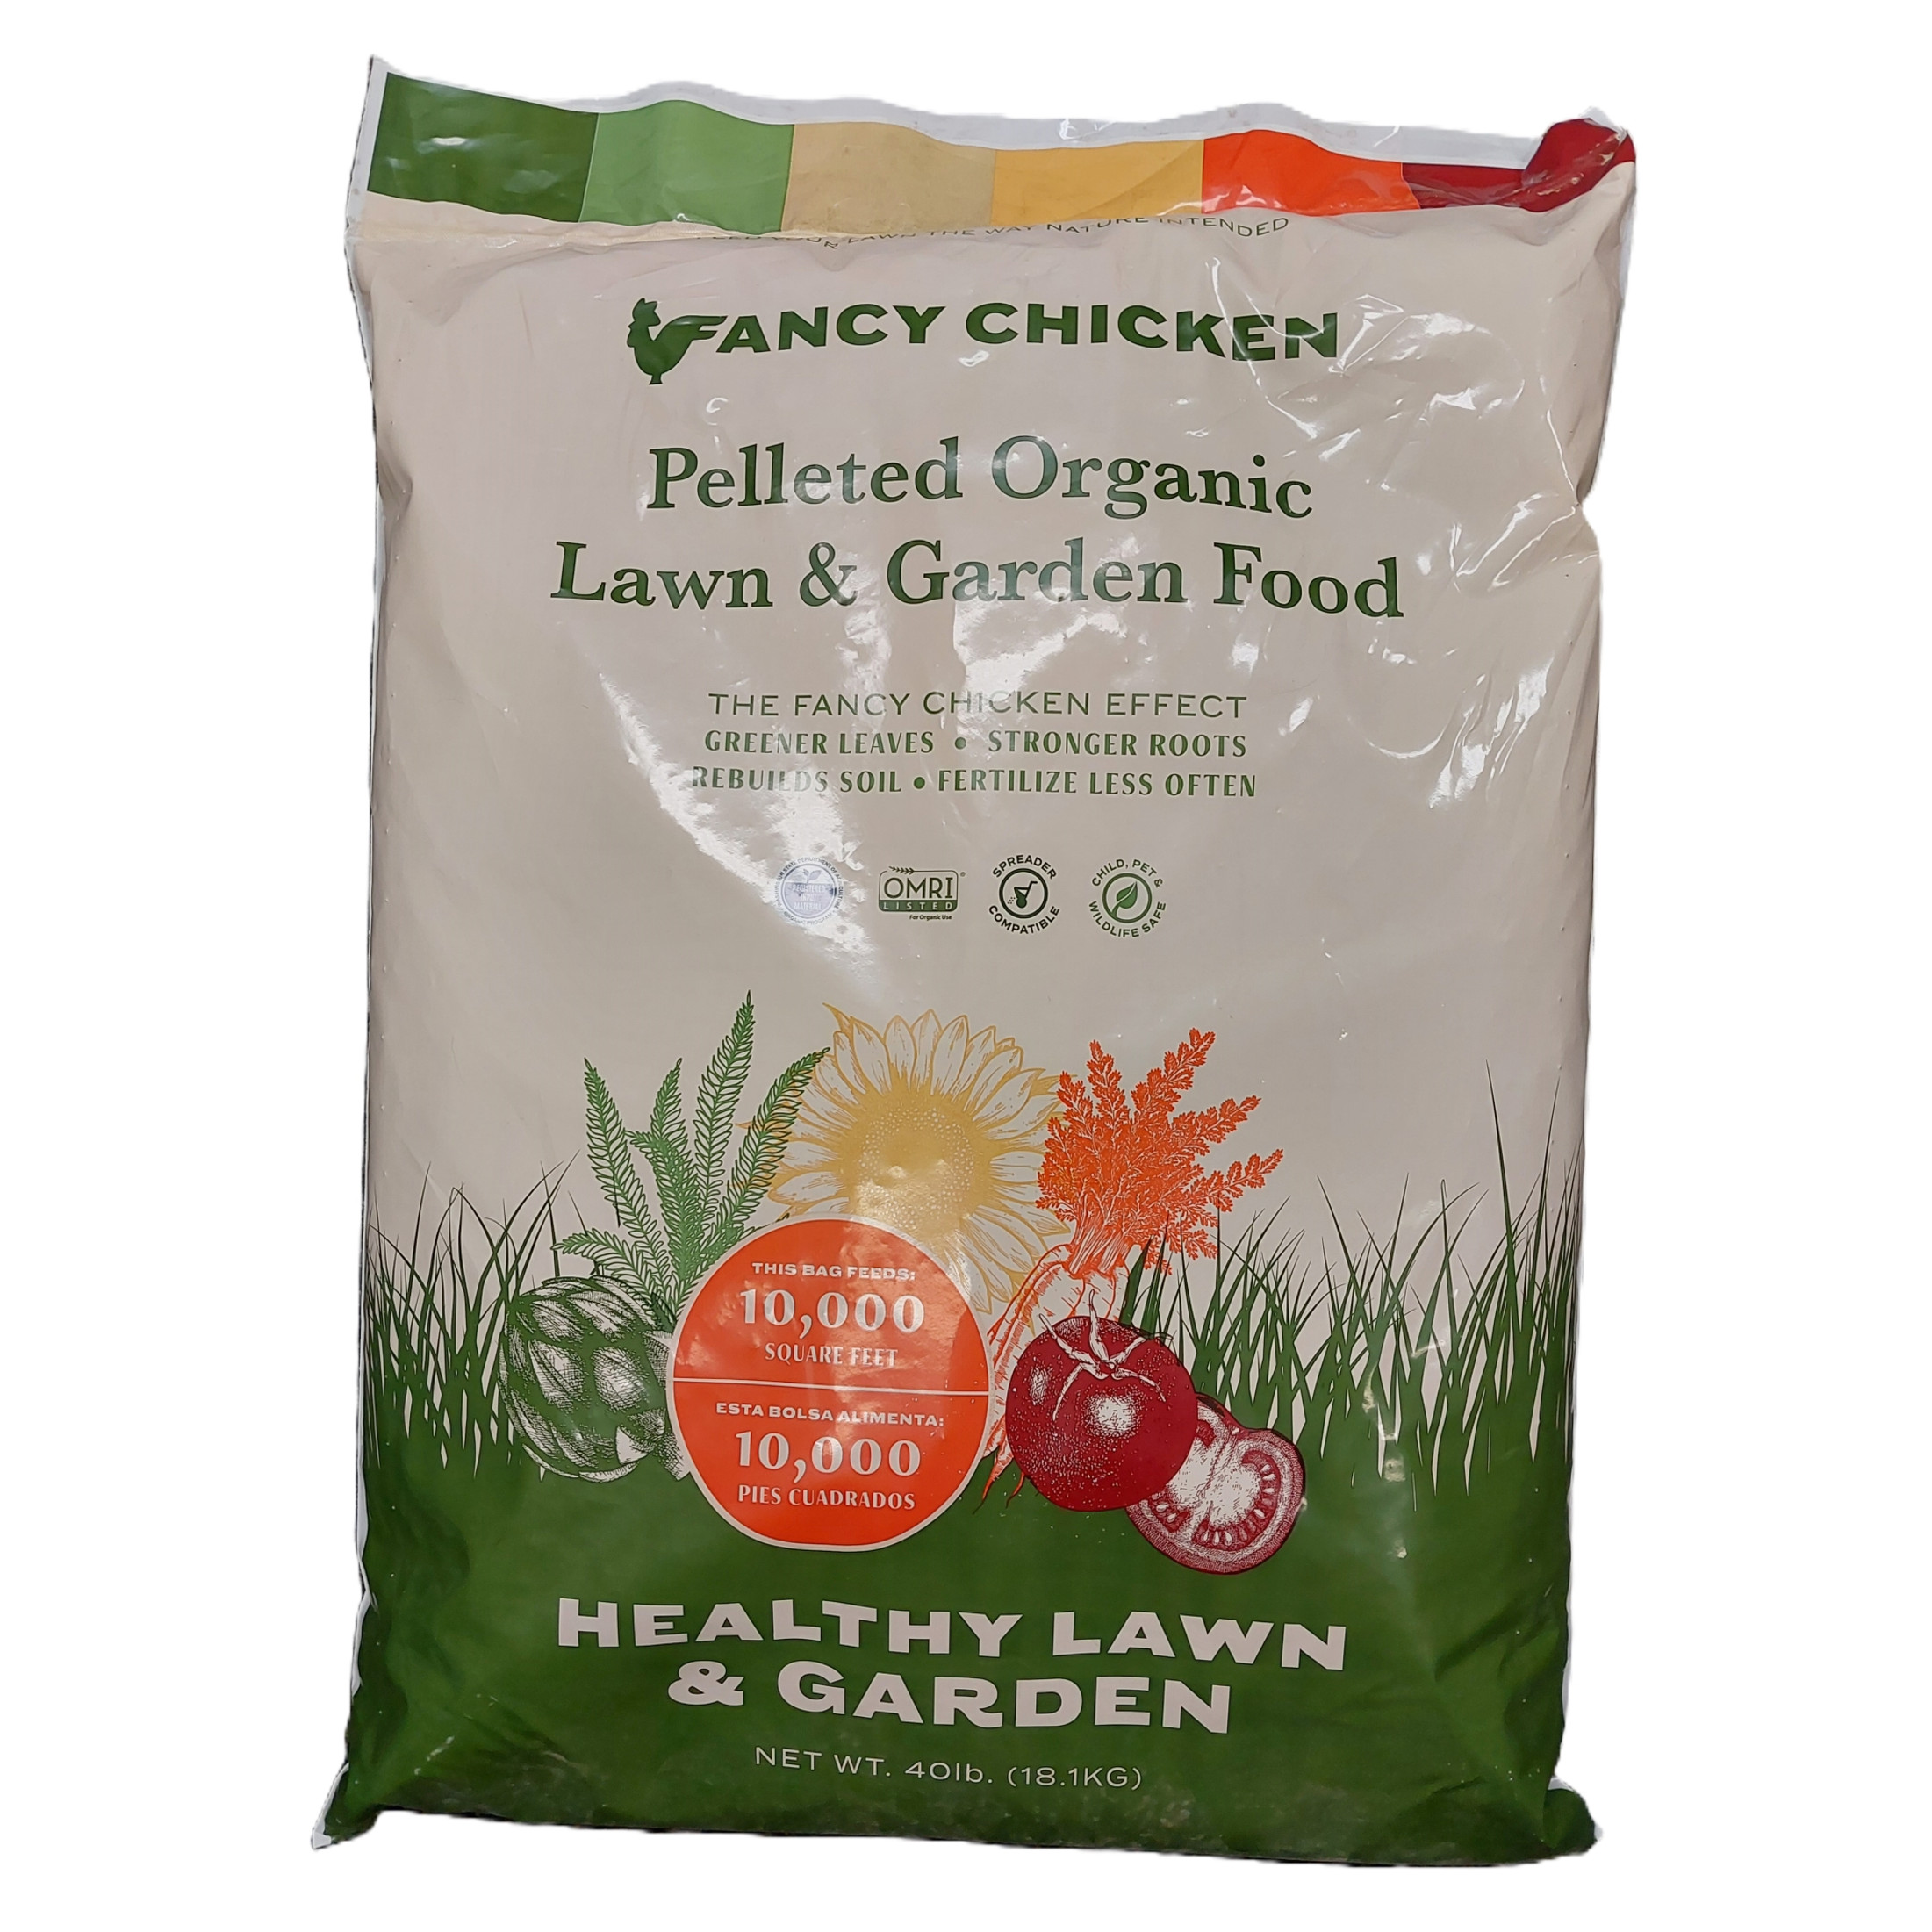 Fancy Chicken 4-2.5-2 Pelleted Organic Poultry Manure Lawn & Garden Food, OMRI Listed, USDA Organic, 40lb